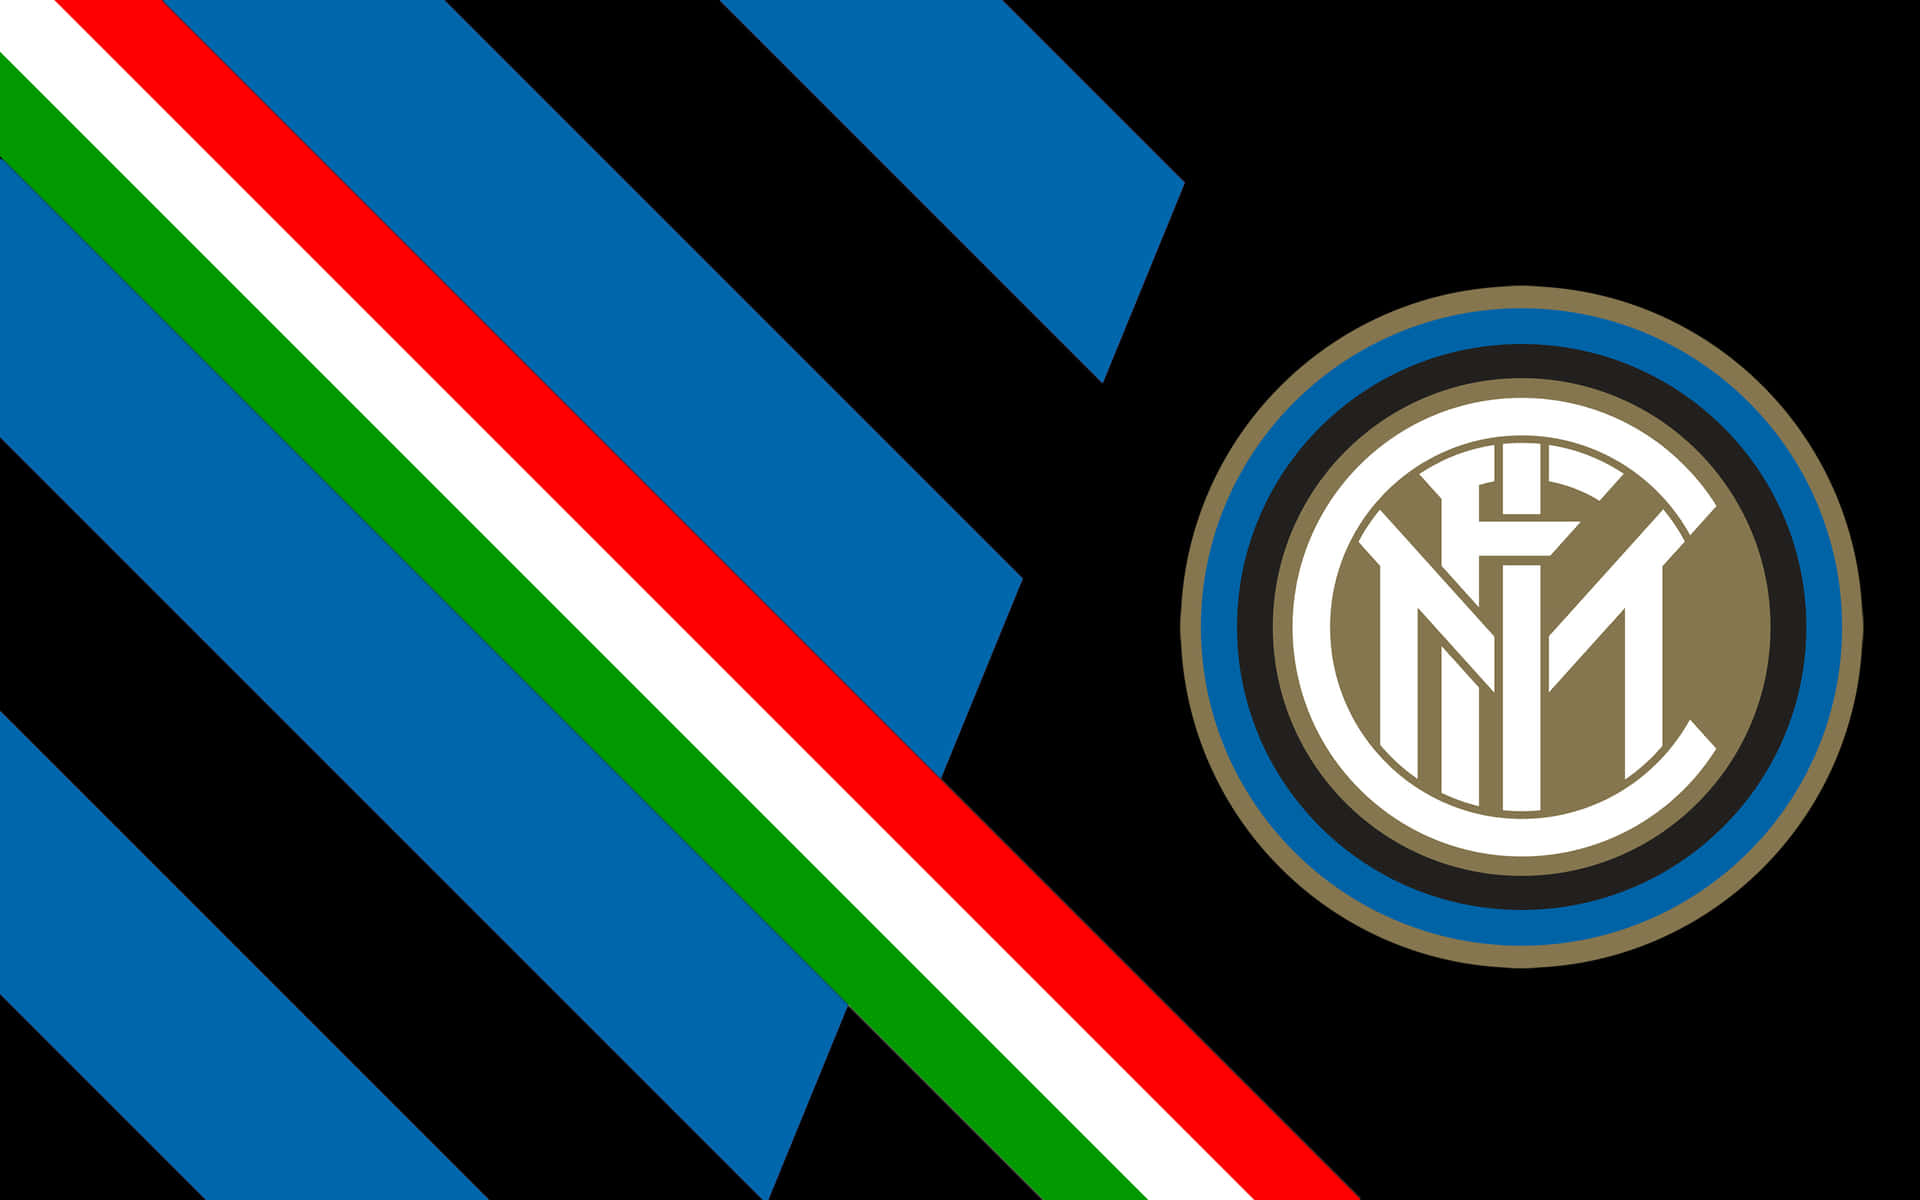 Intermediate Art Inter Milan Logo Wallpaper